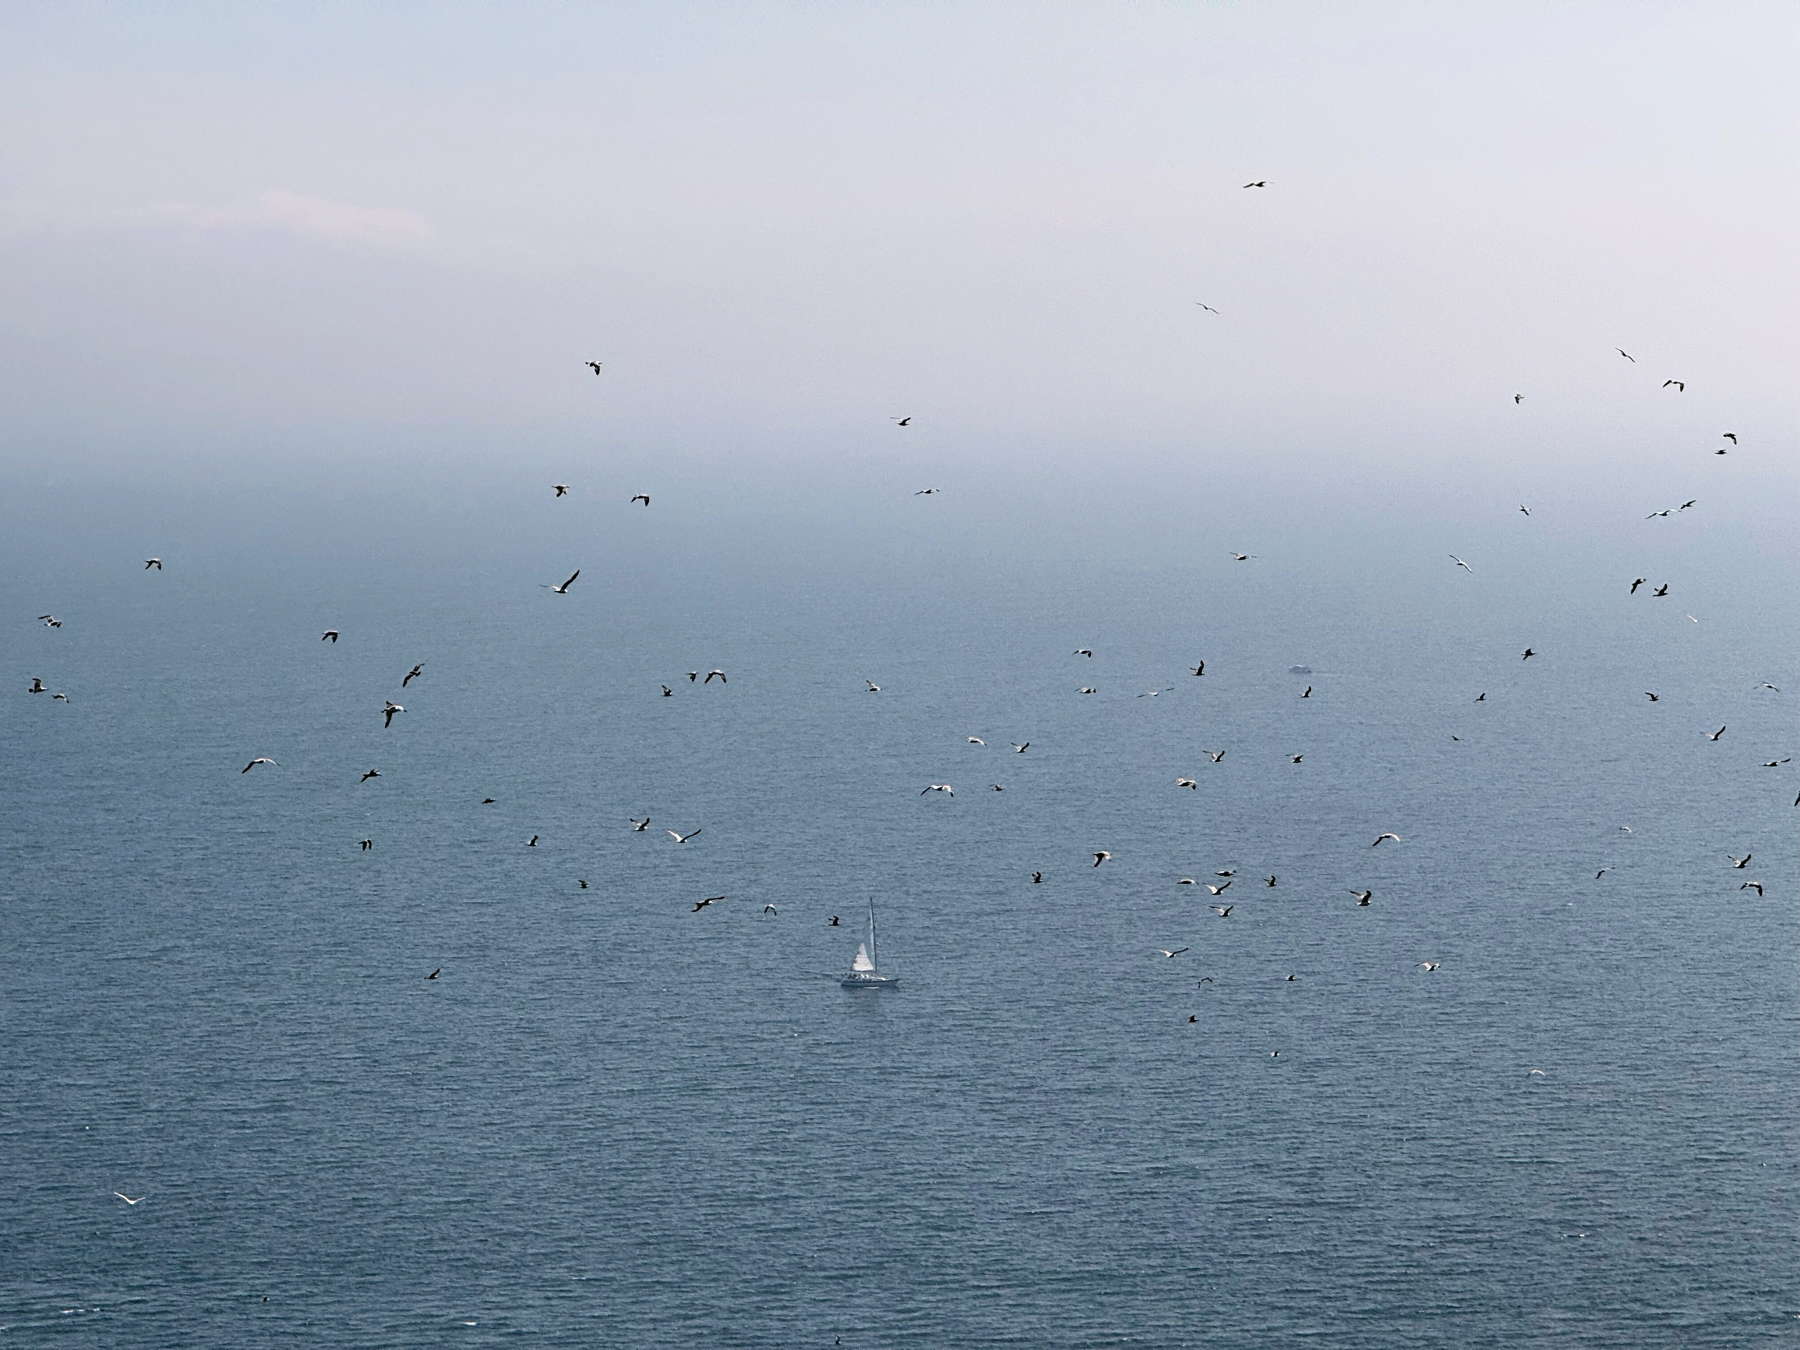 Seagulls surround a single sailboat amongst a hazy sea